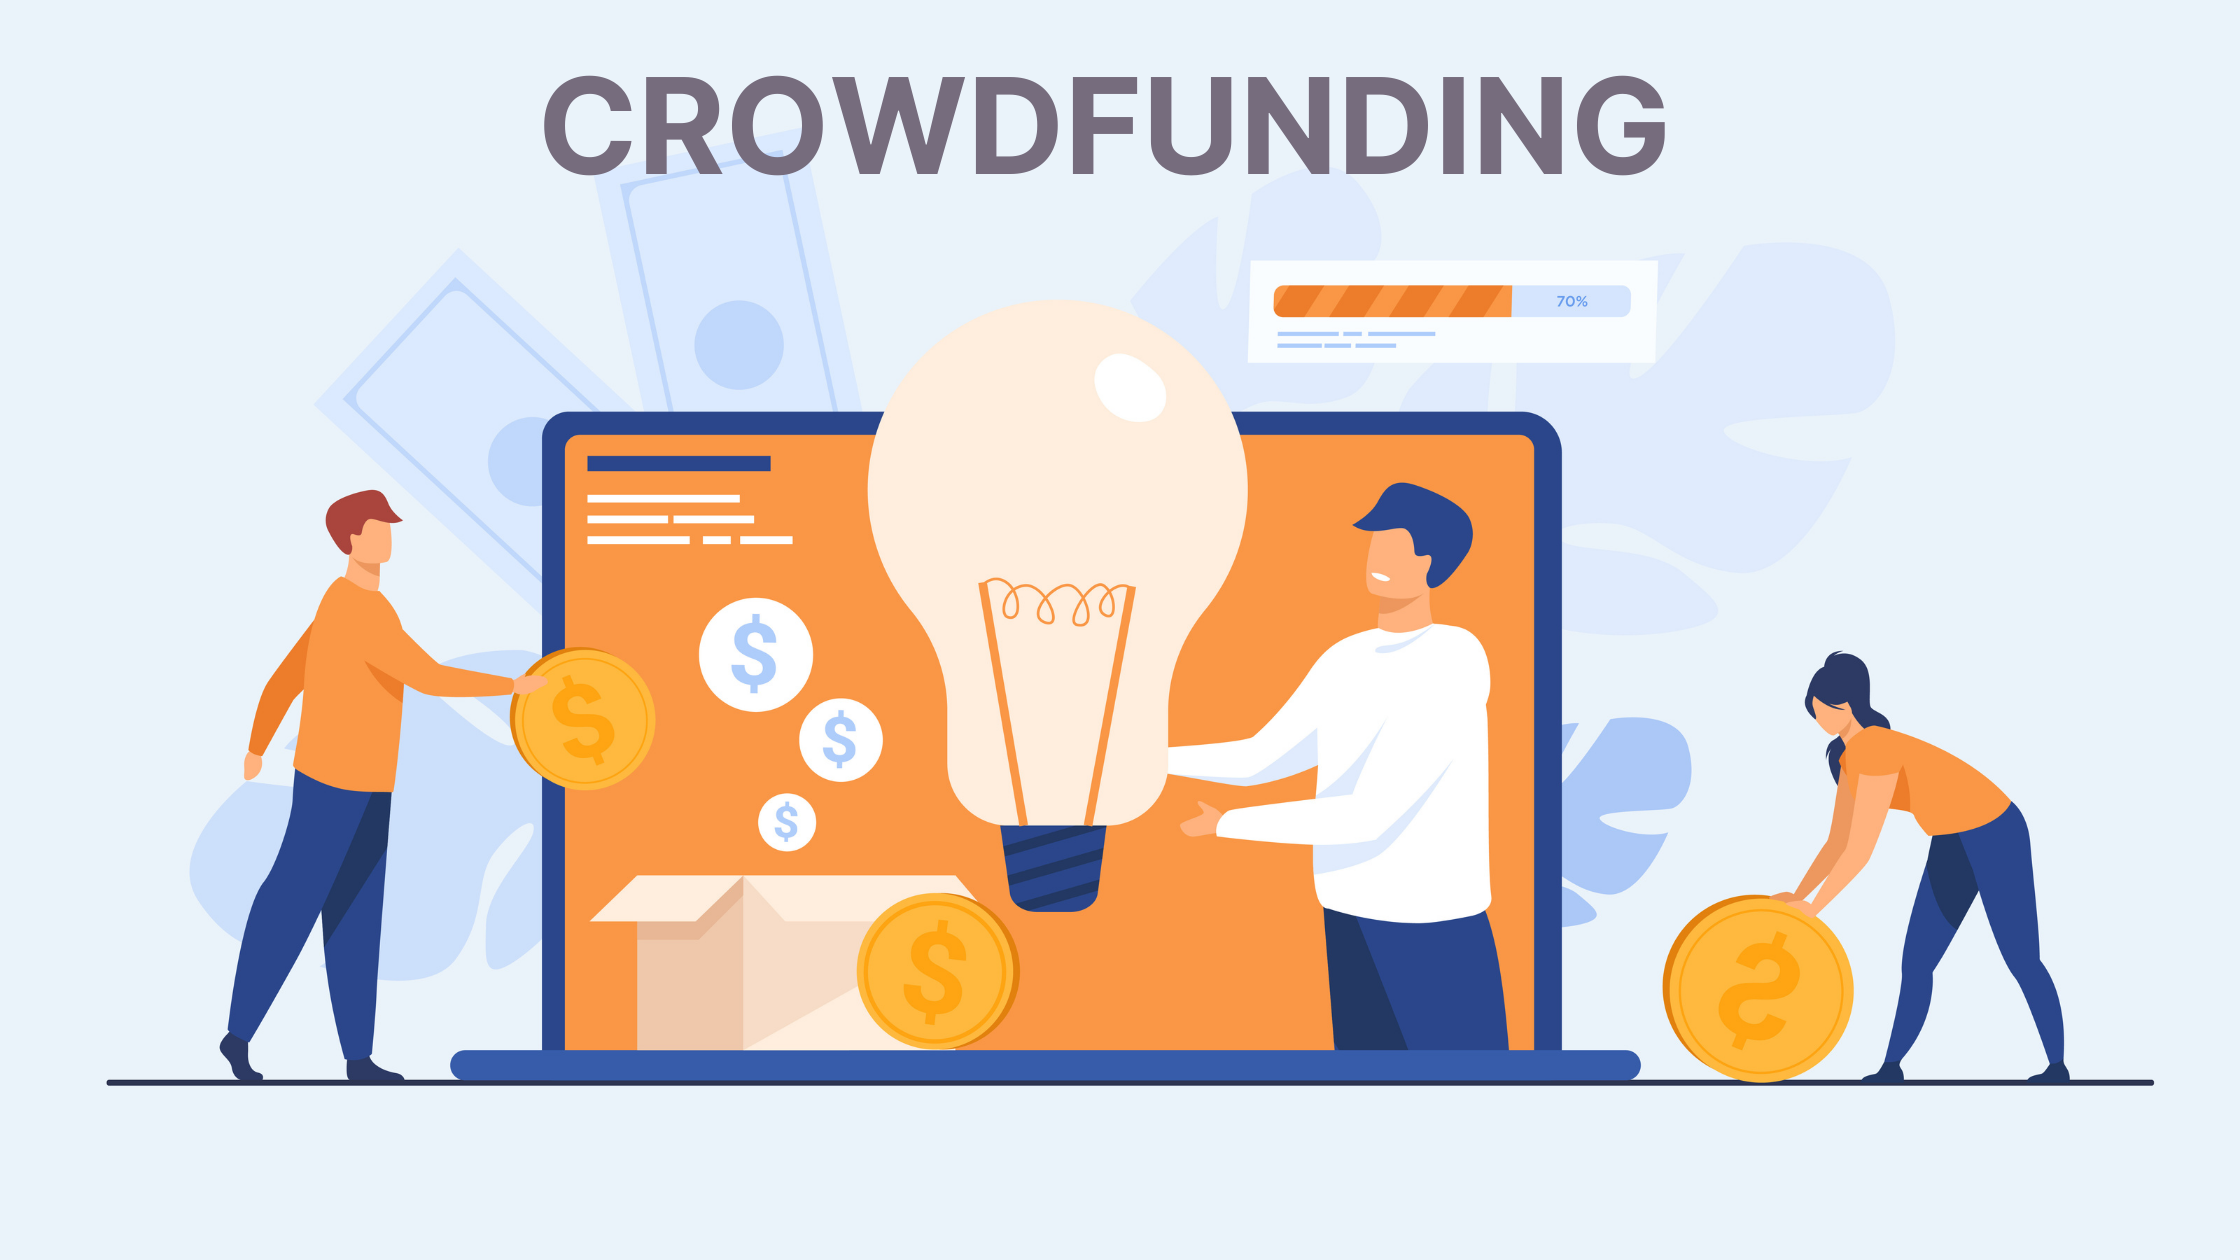 How to create a crowdfunding platform